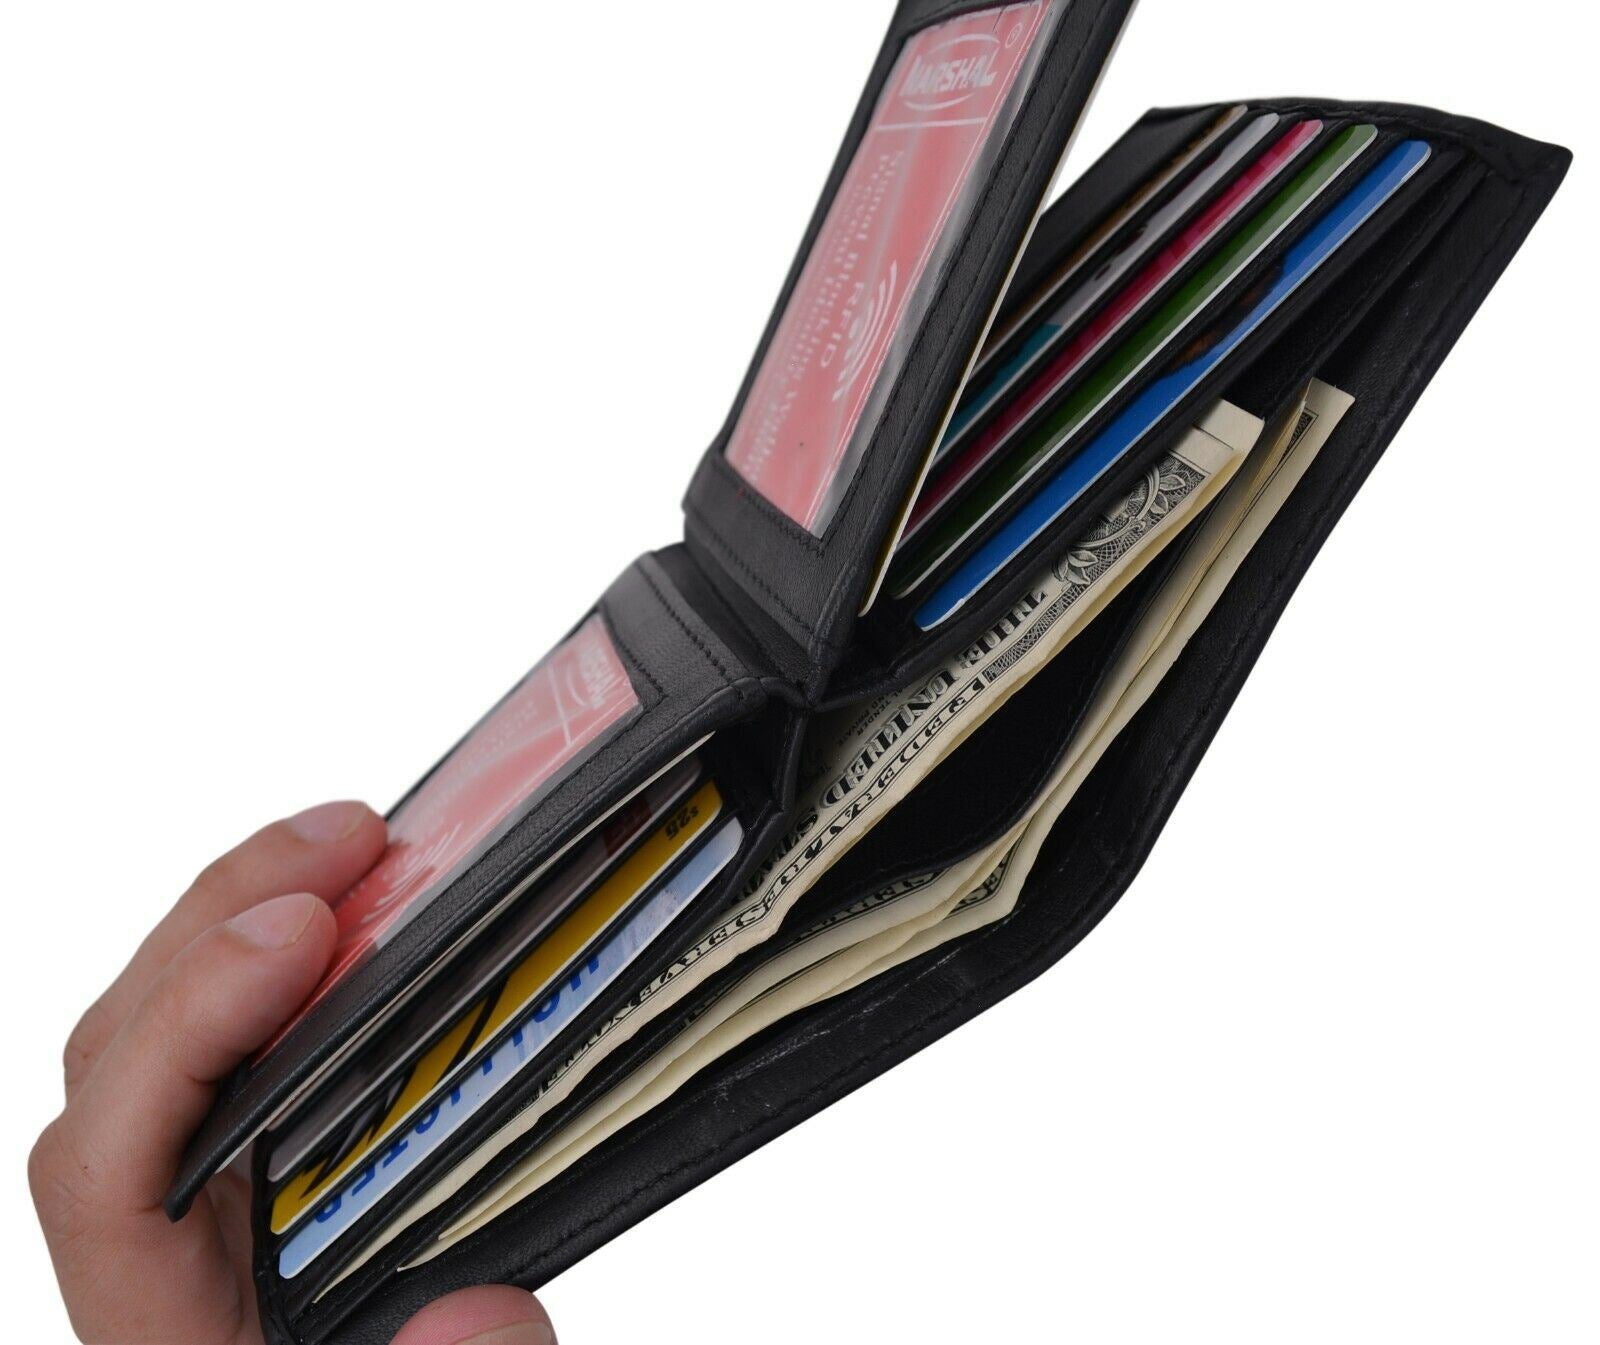 Leather Olive Green Mens Card Holder Wallet, Card Slots: 2